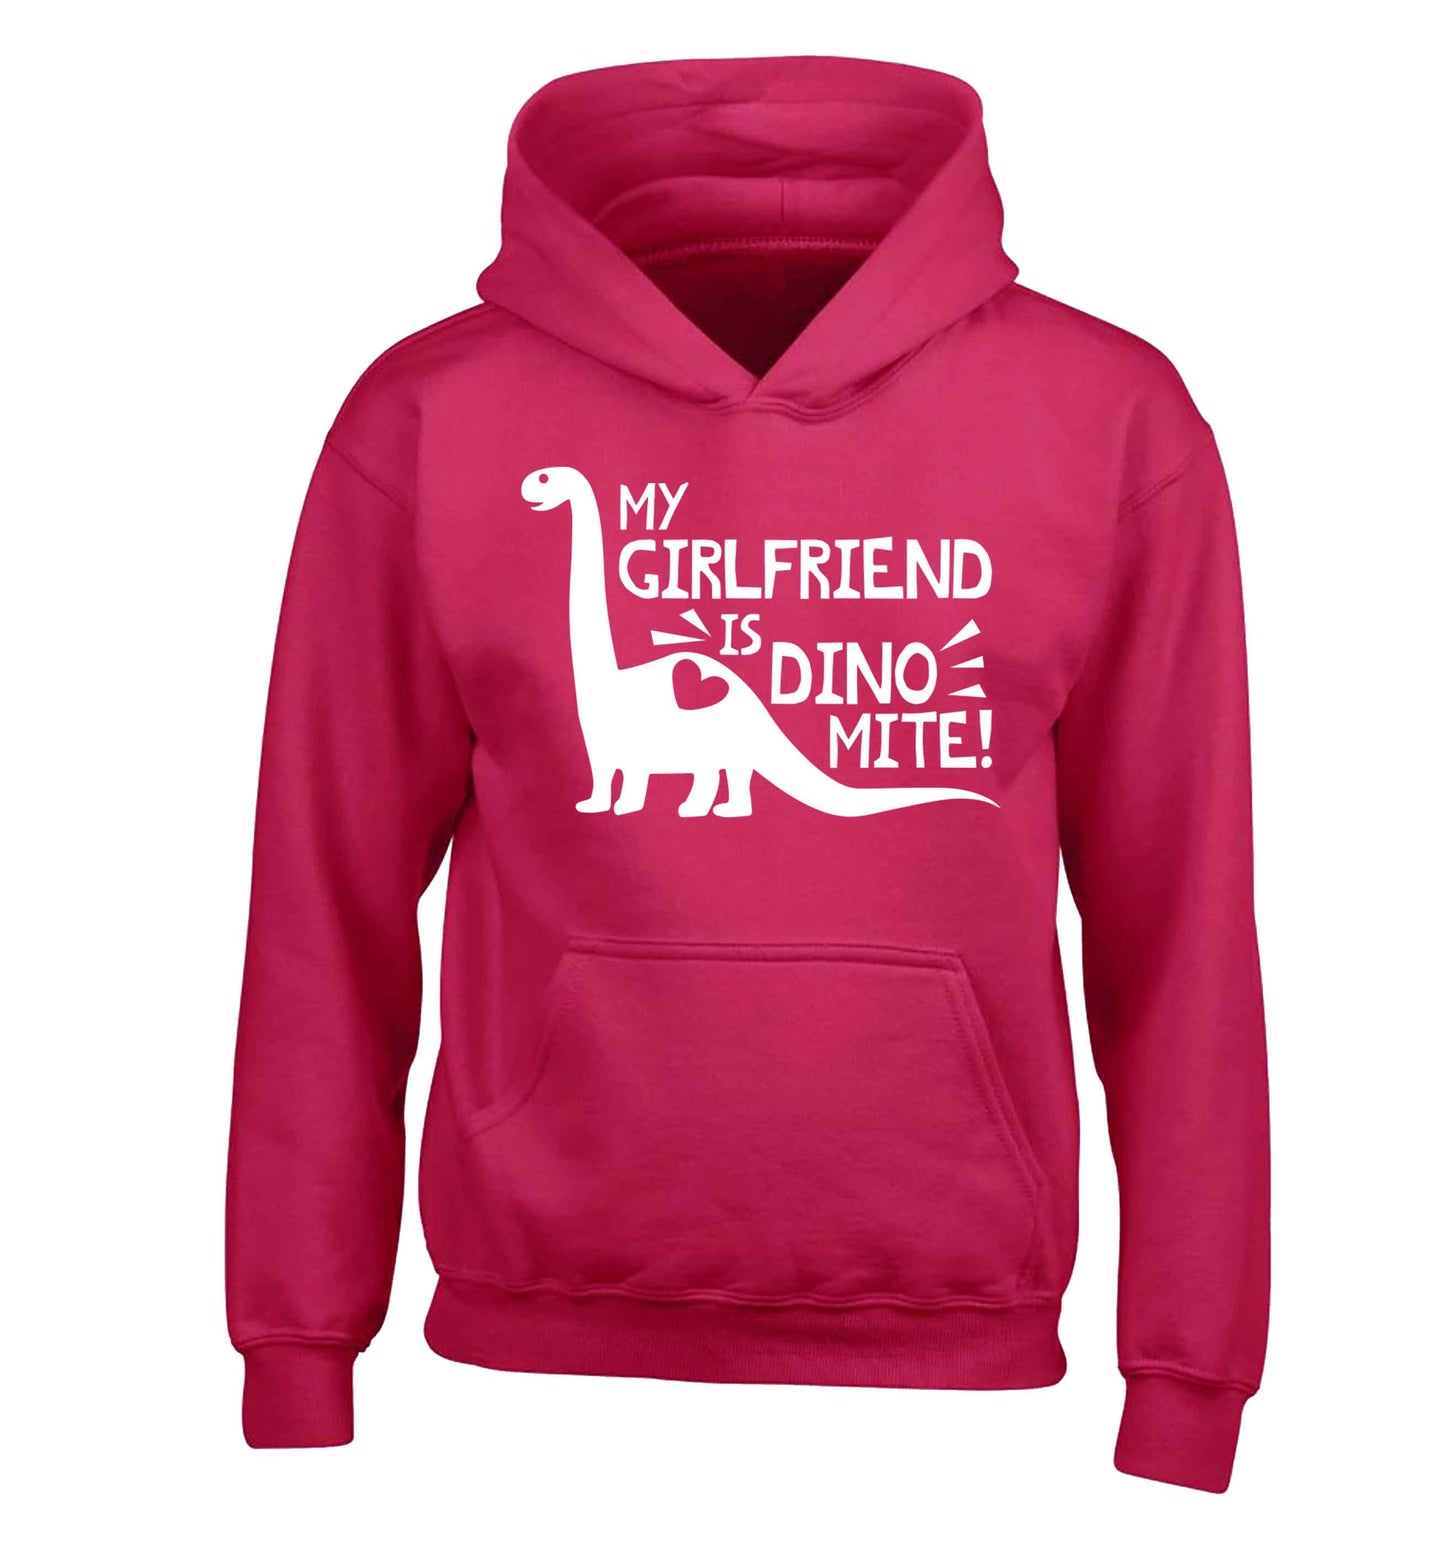 My girlfriend is dinomite! children's pink hoodie 12-13 Years